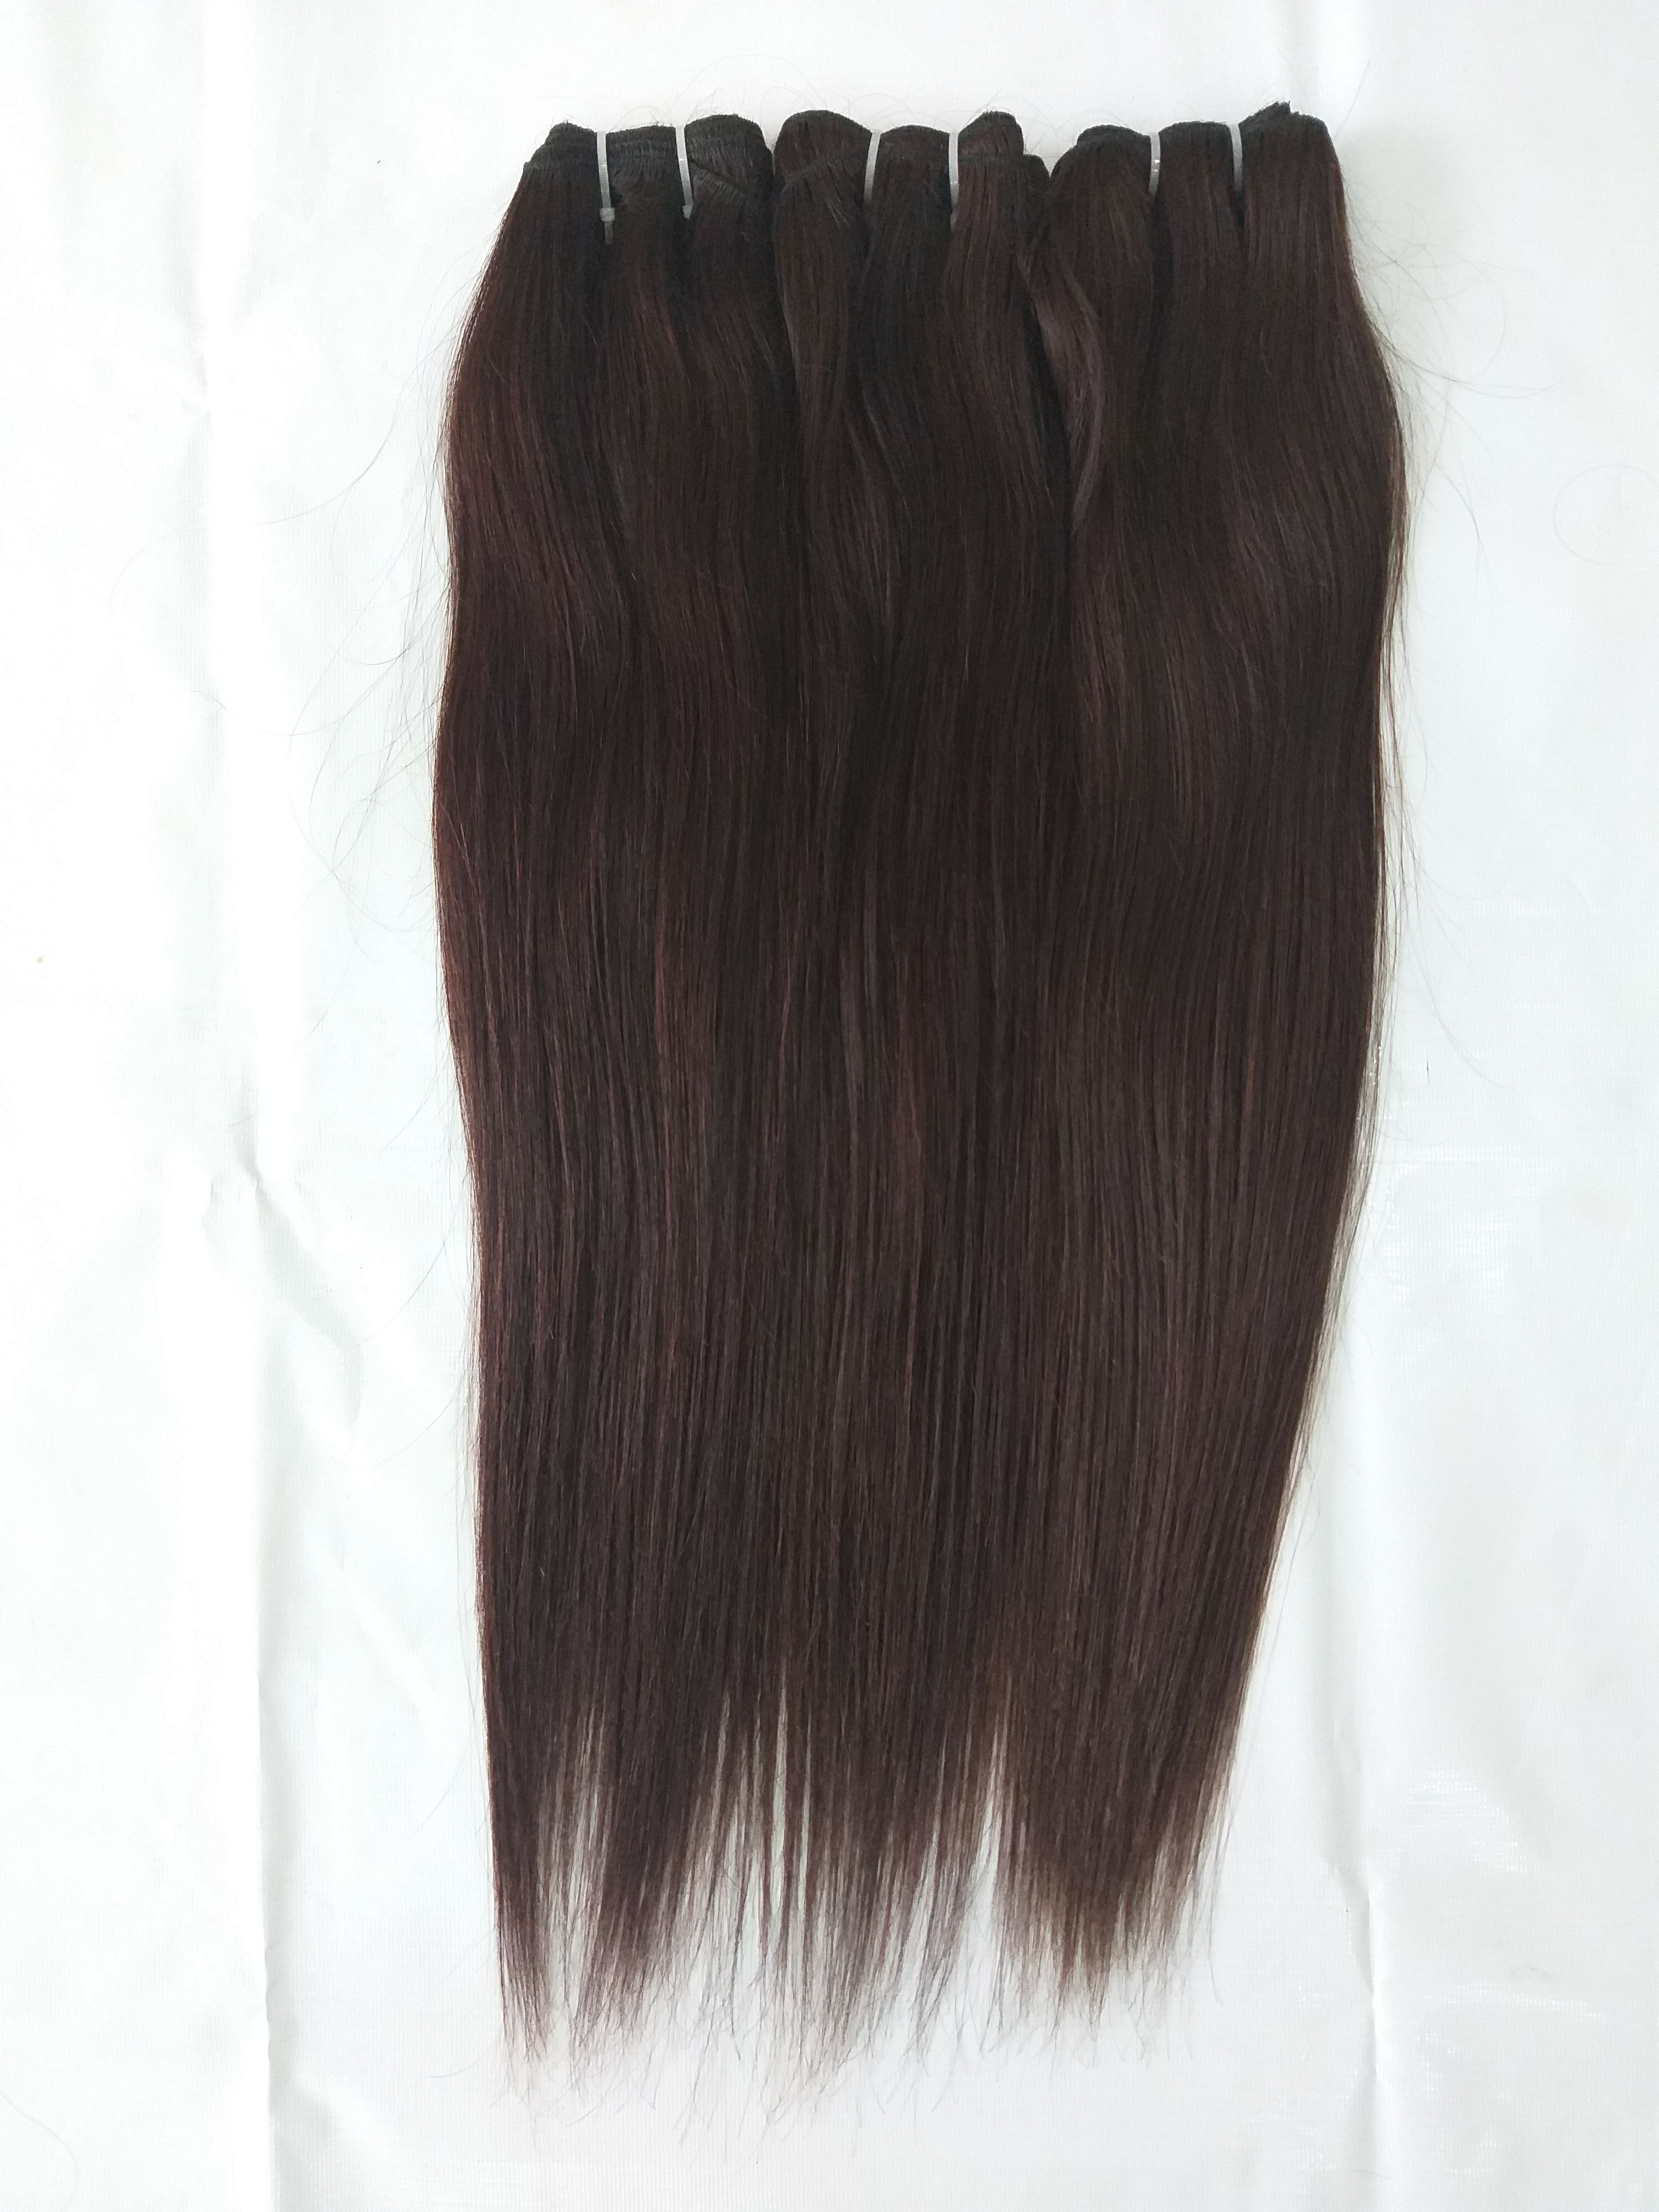 Straight Hair Bundles Brazilian Human Hair Weave